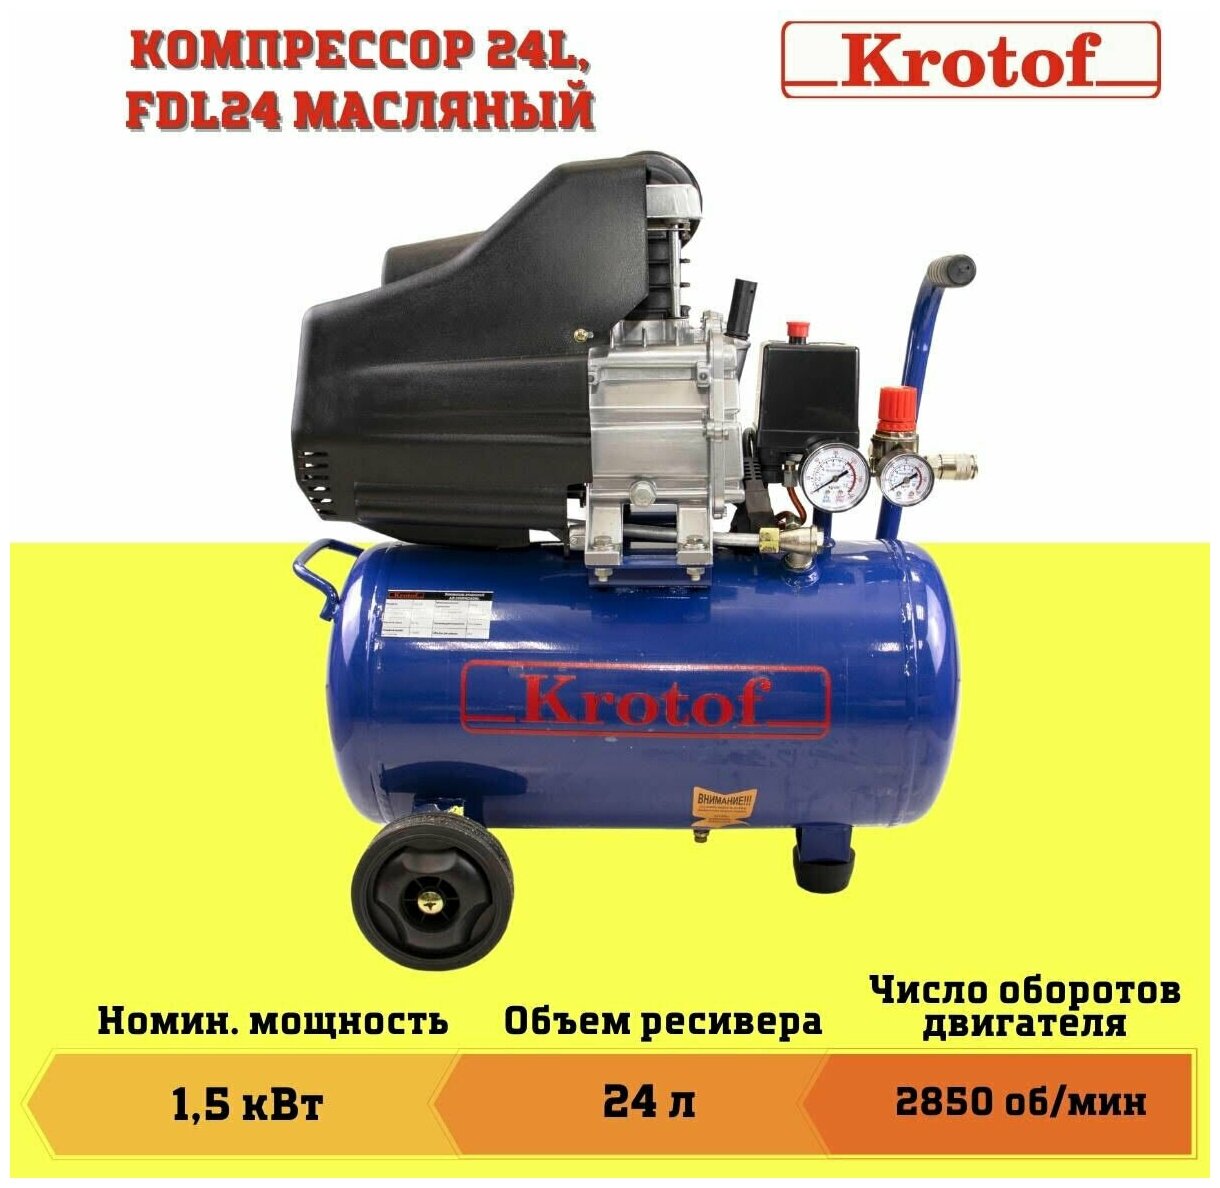 Компрессор Krotof 24L (ресивер 24 литра), FDL24 / кротоф - фотография № 1